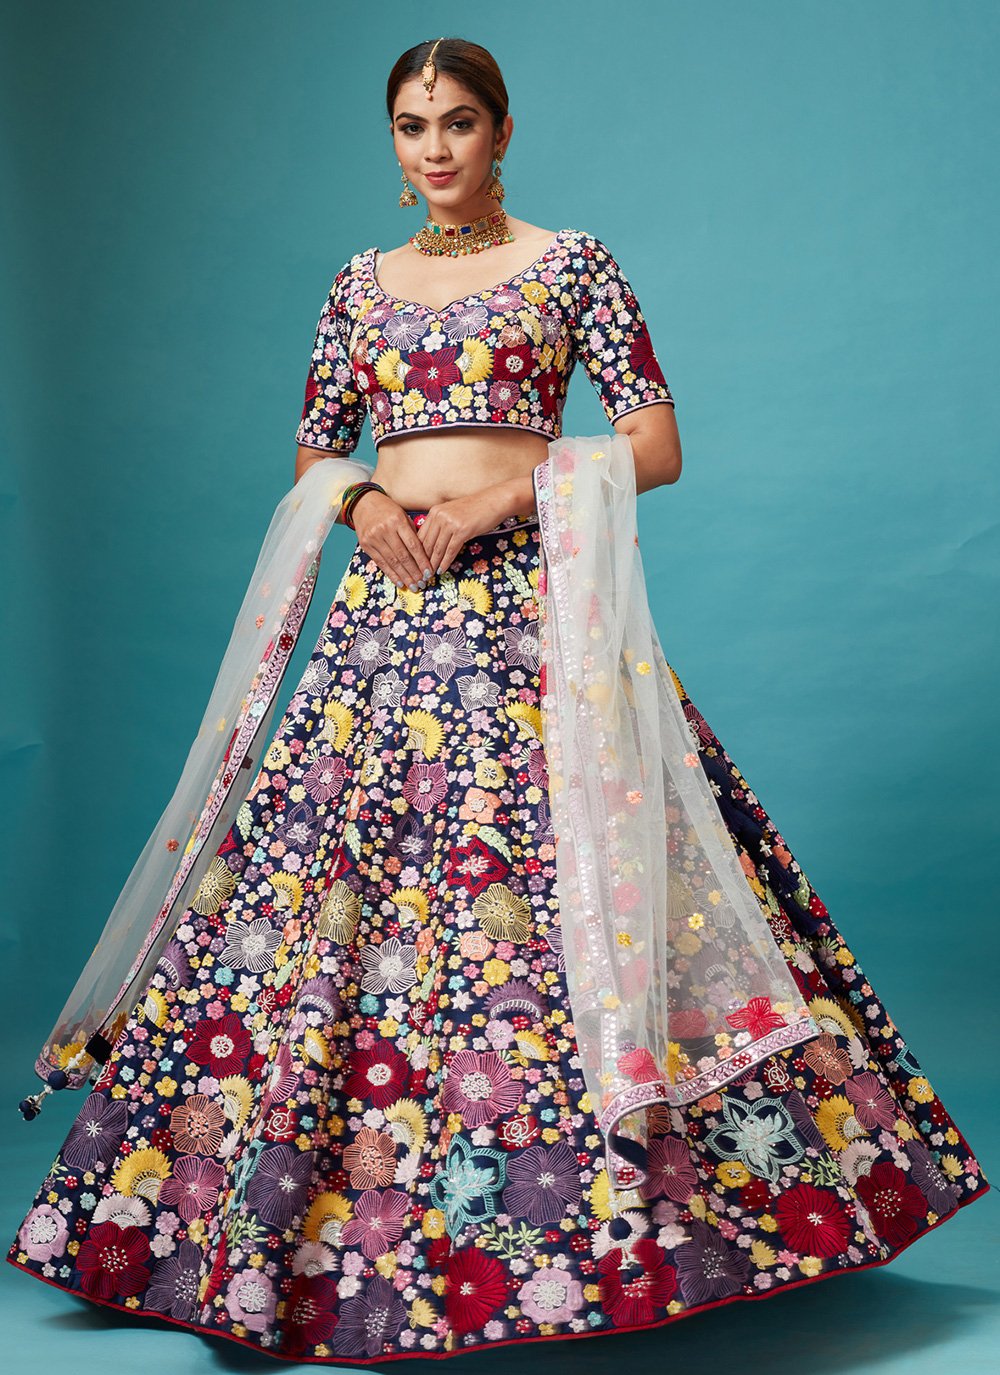 Lakdawala Indi Girls Lehenga Choli Ethnic Wear Self Design Ghagra Choli  Price in India - Buy Lakdawala Indi Girls Lehenga Choli Ethnic Wear Self Design  Ghagra Choli online at Flipkart.com